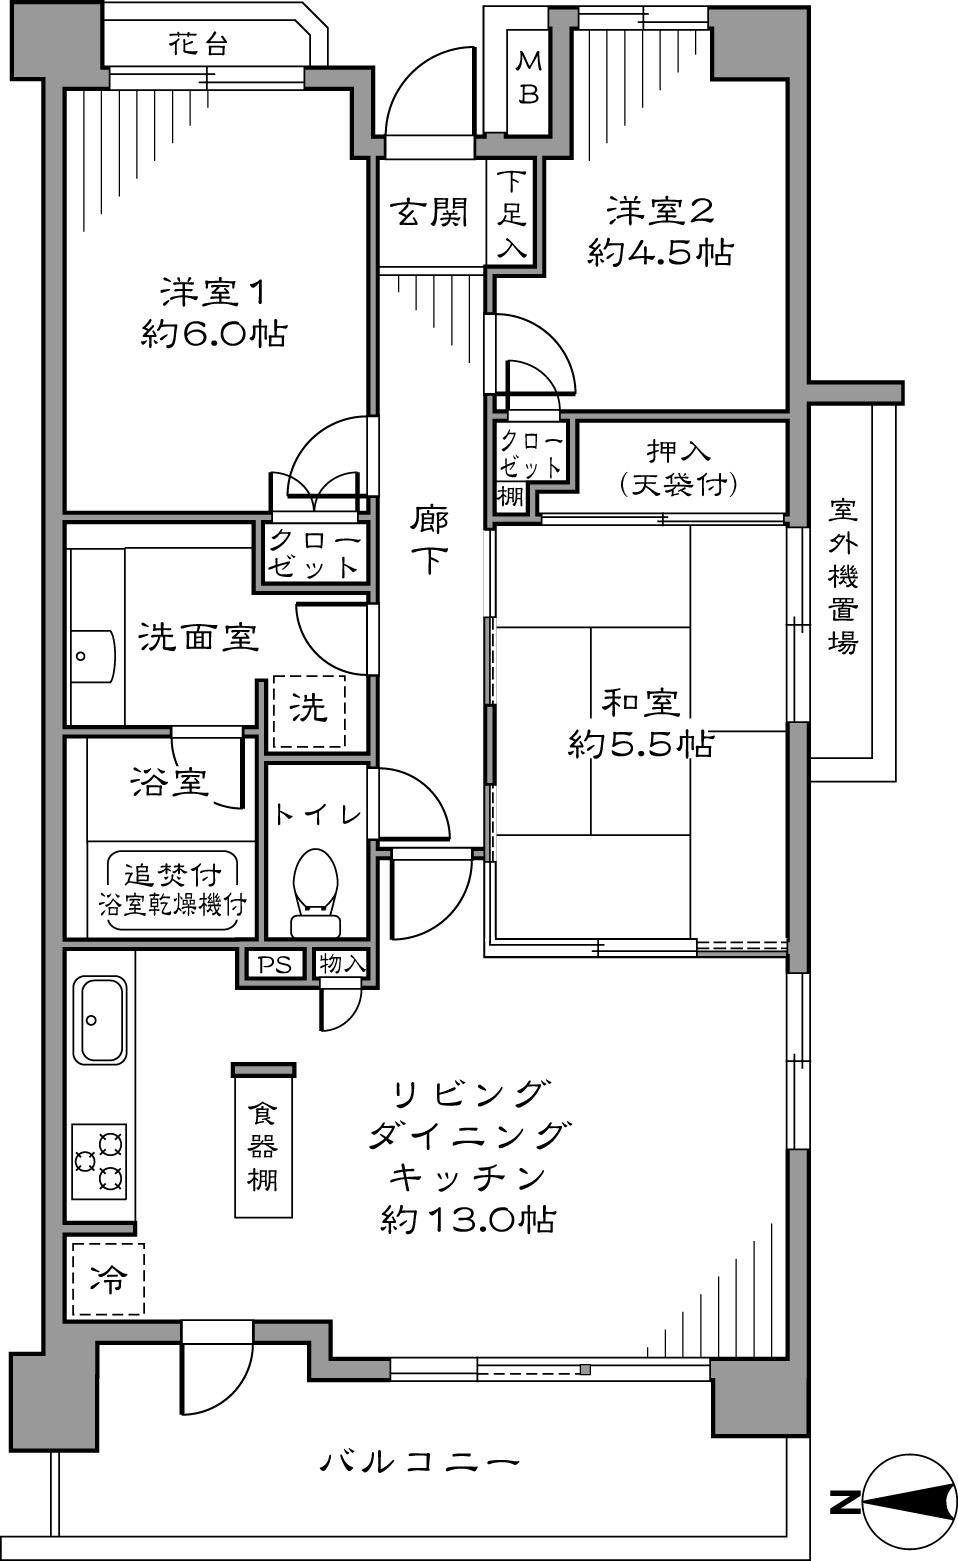 Floor plan. 3LDK, Price 32,800,000 yen, Occupied area 65.66 sq m , Balcony area 9.73 sq m